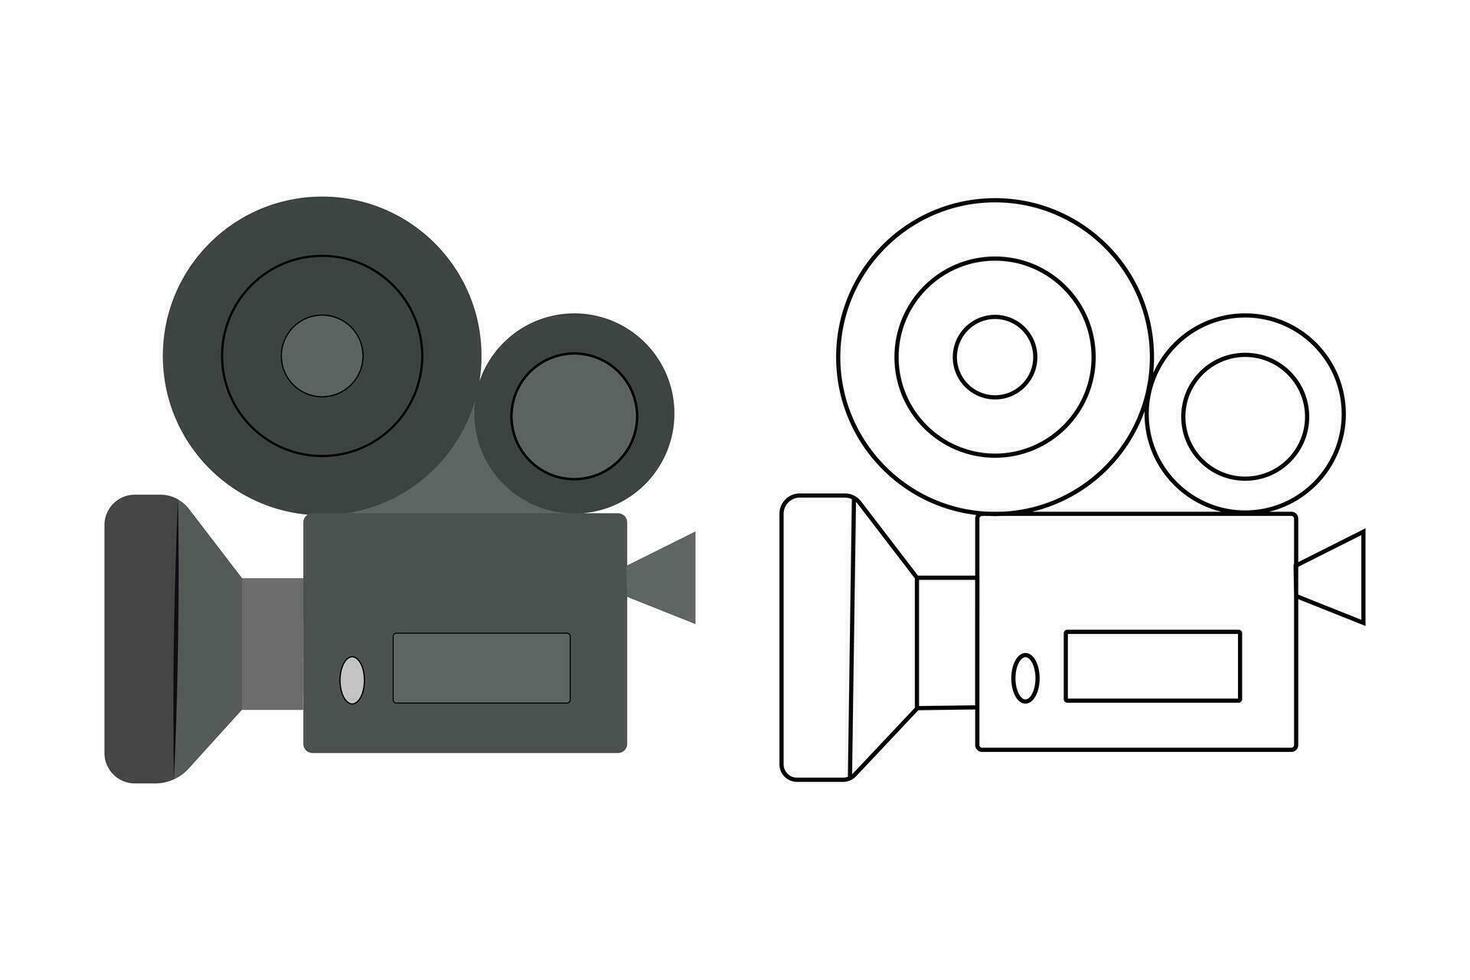 Retro Video camera icon movie shooting, flimmaking, cameraman equipment isolated vector illustration.